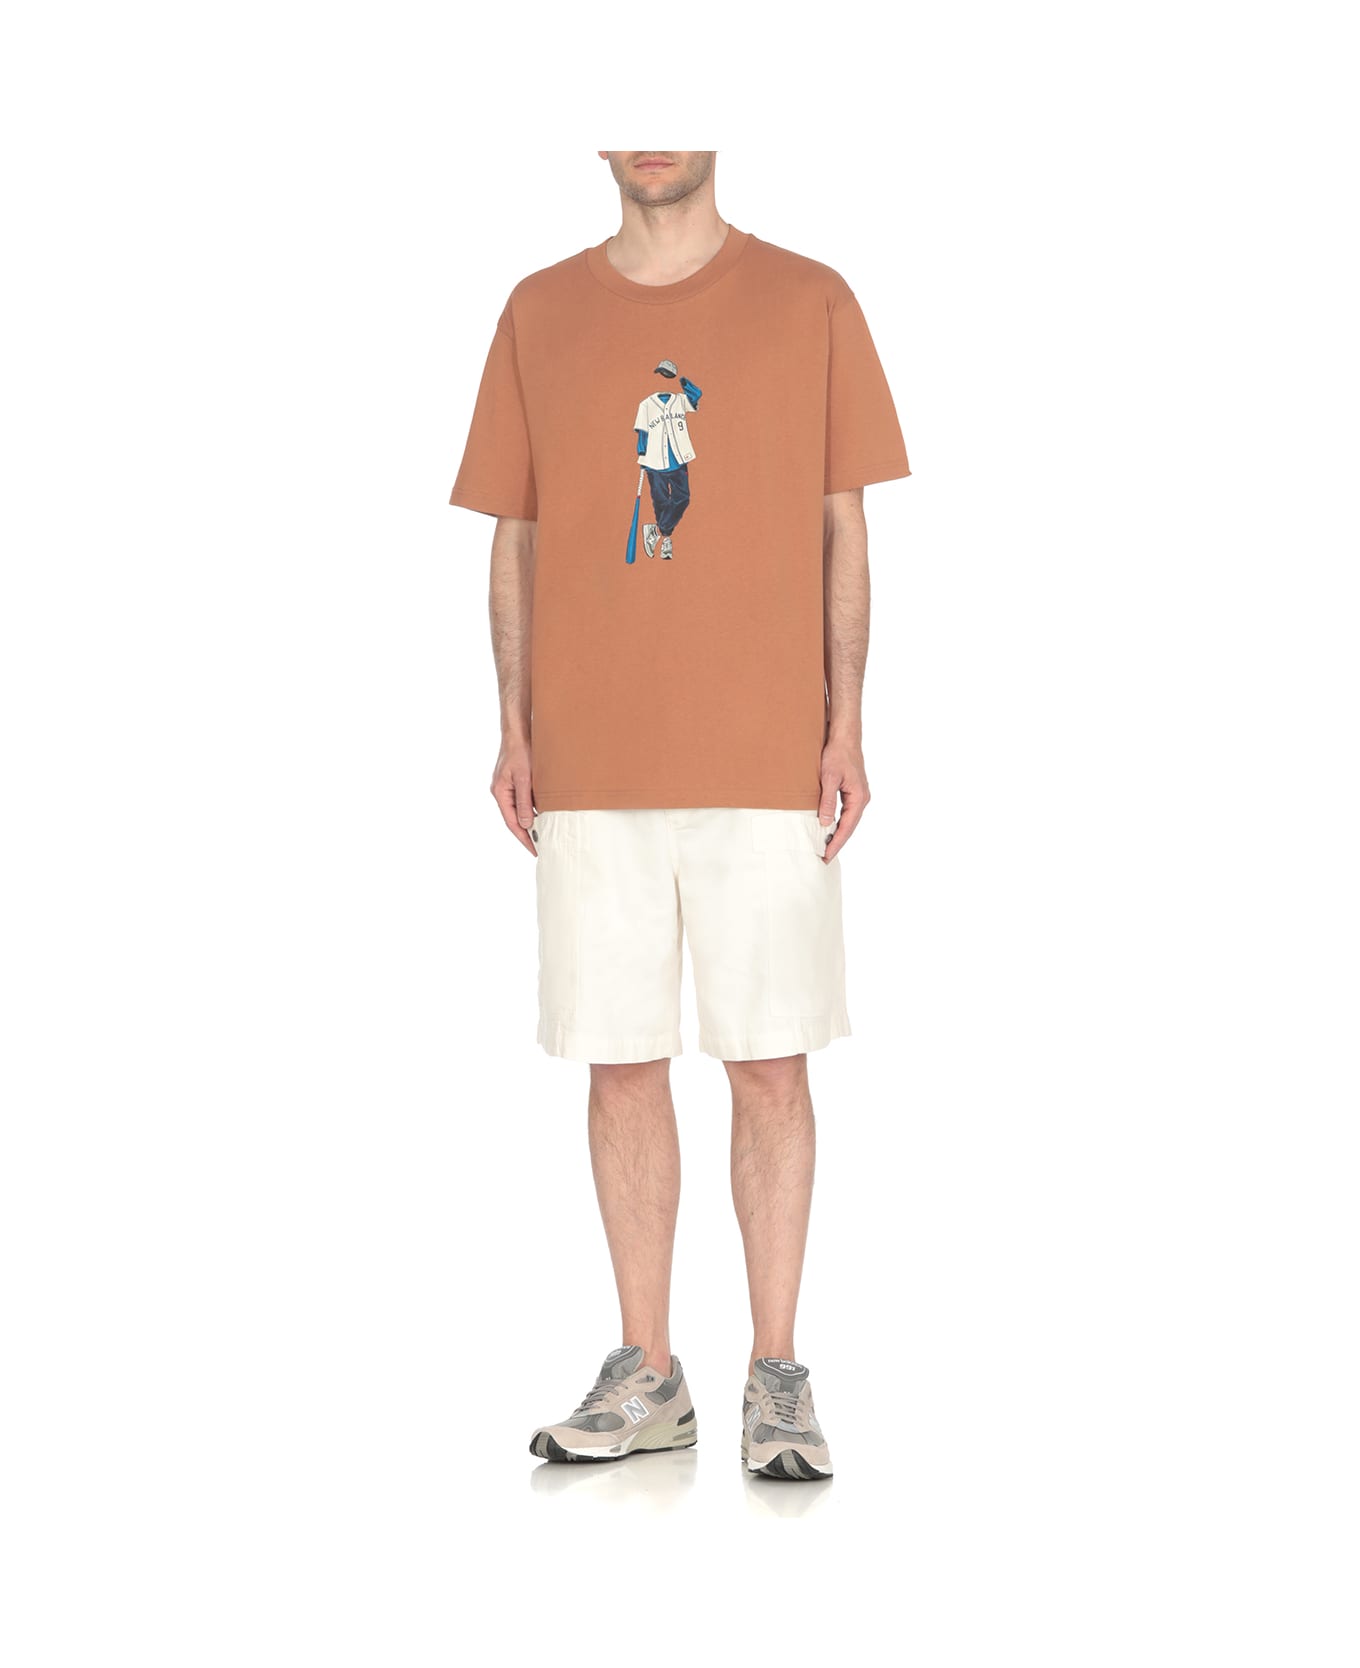 New Balance Athletics Basketball T-shirt - Brown シャツ